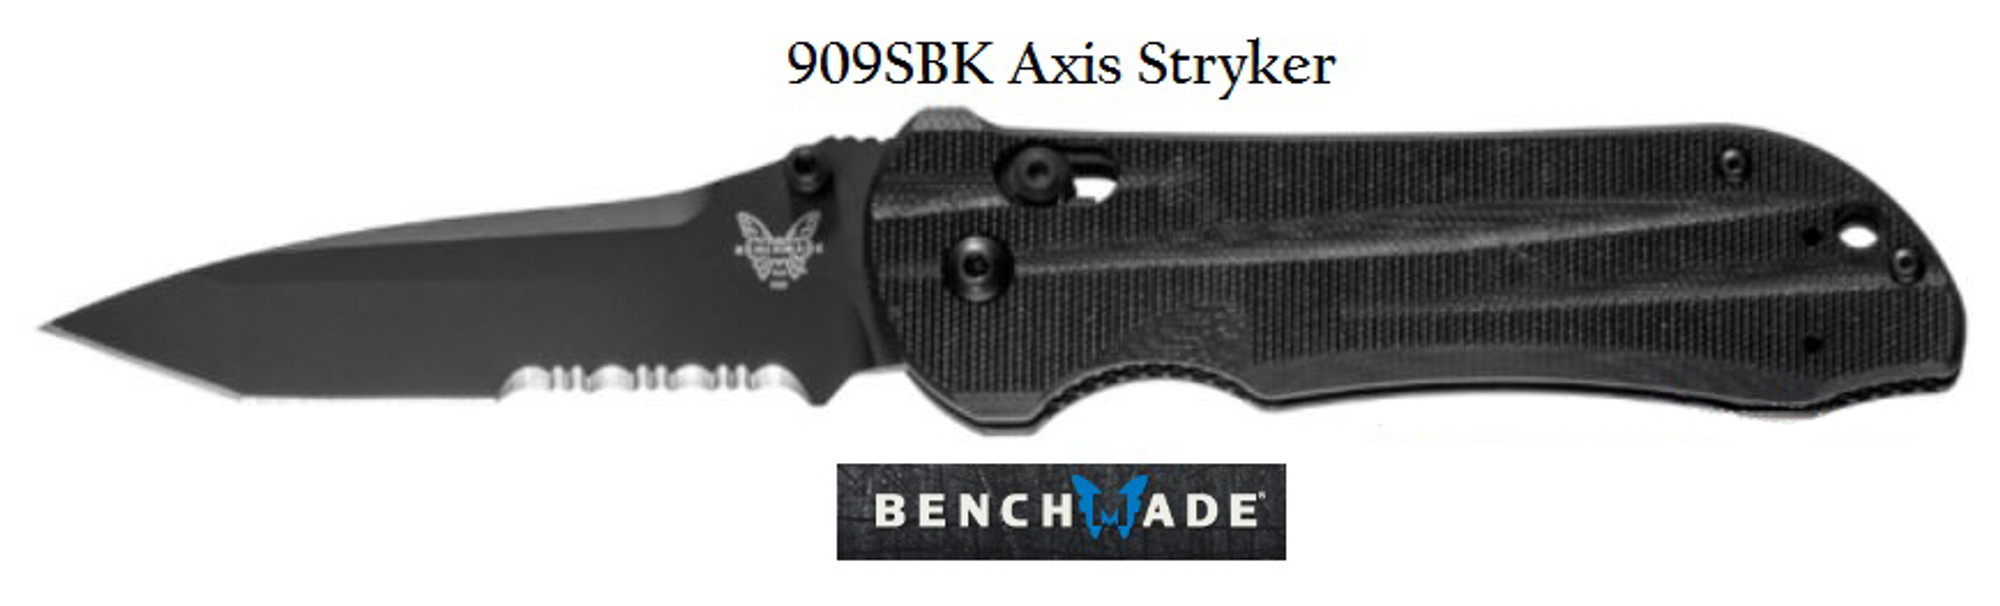 Benchmade 909SBK Axis Stryker Black Blade Partially Serrated